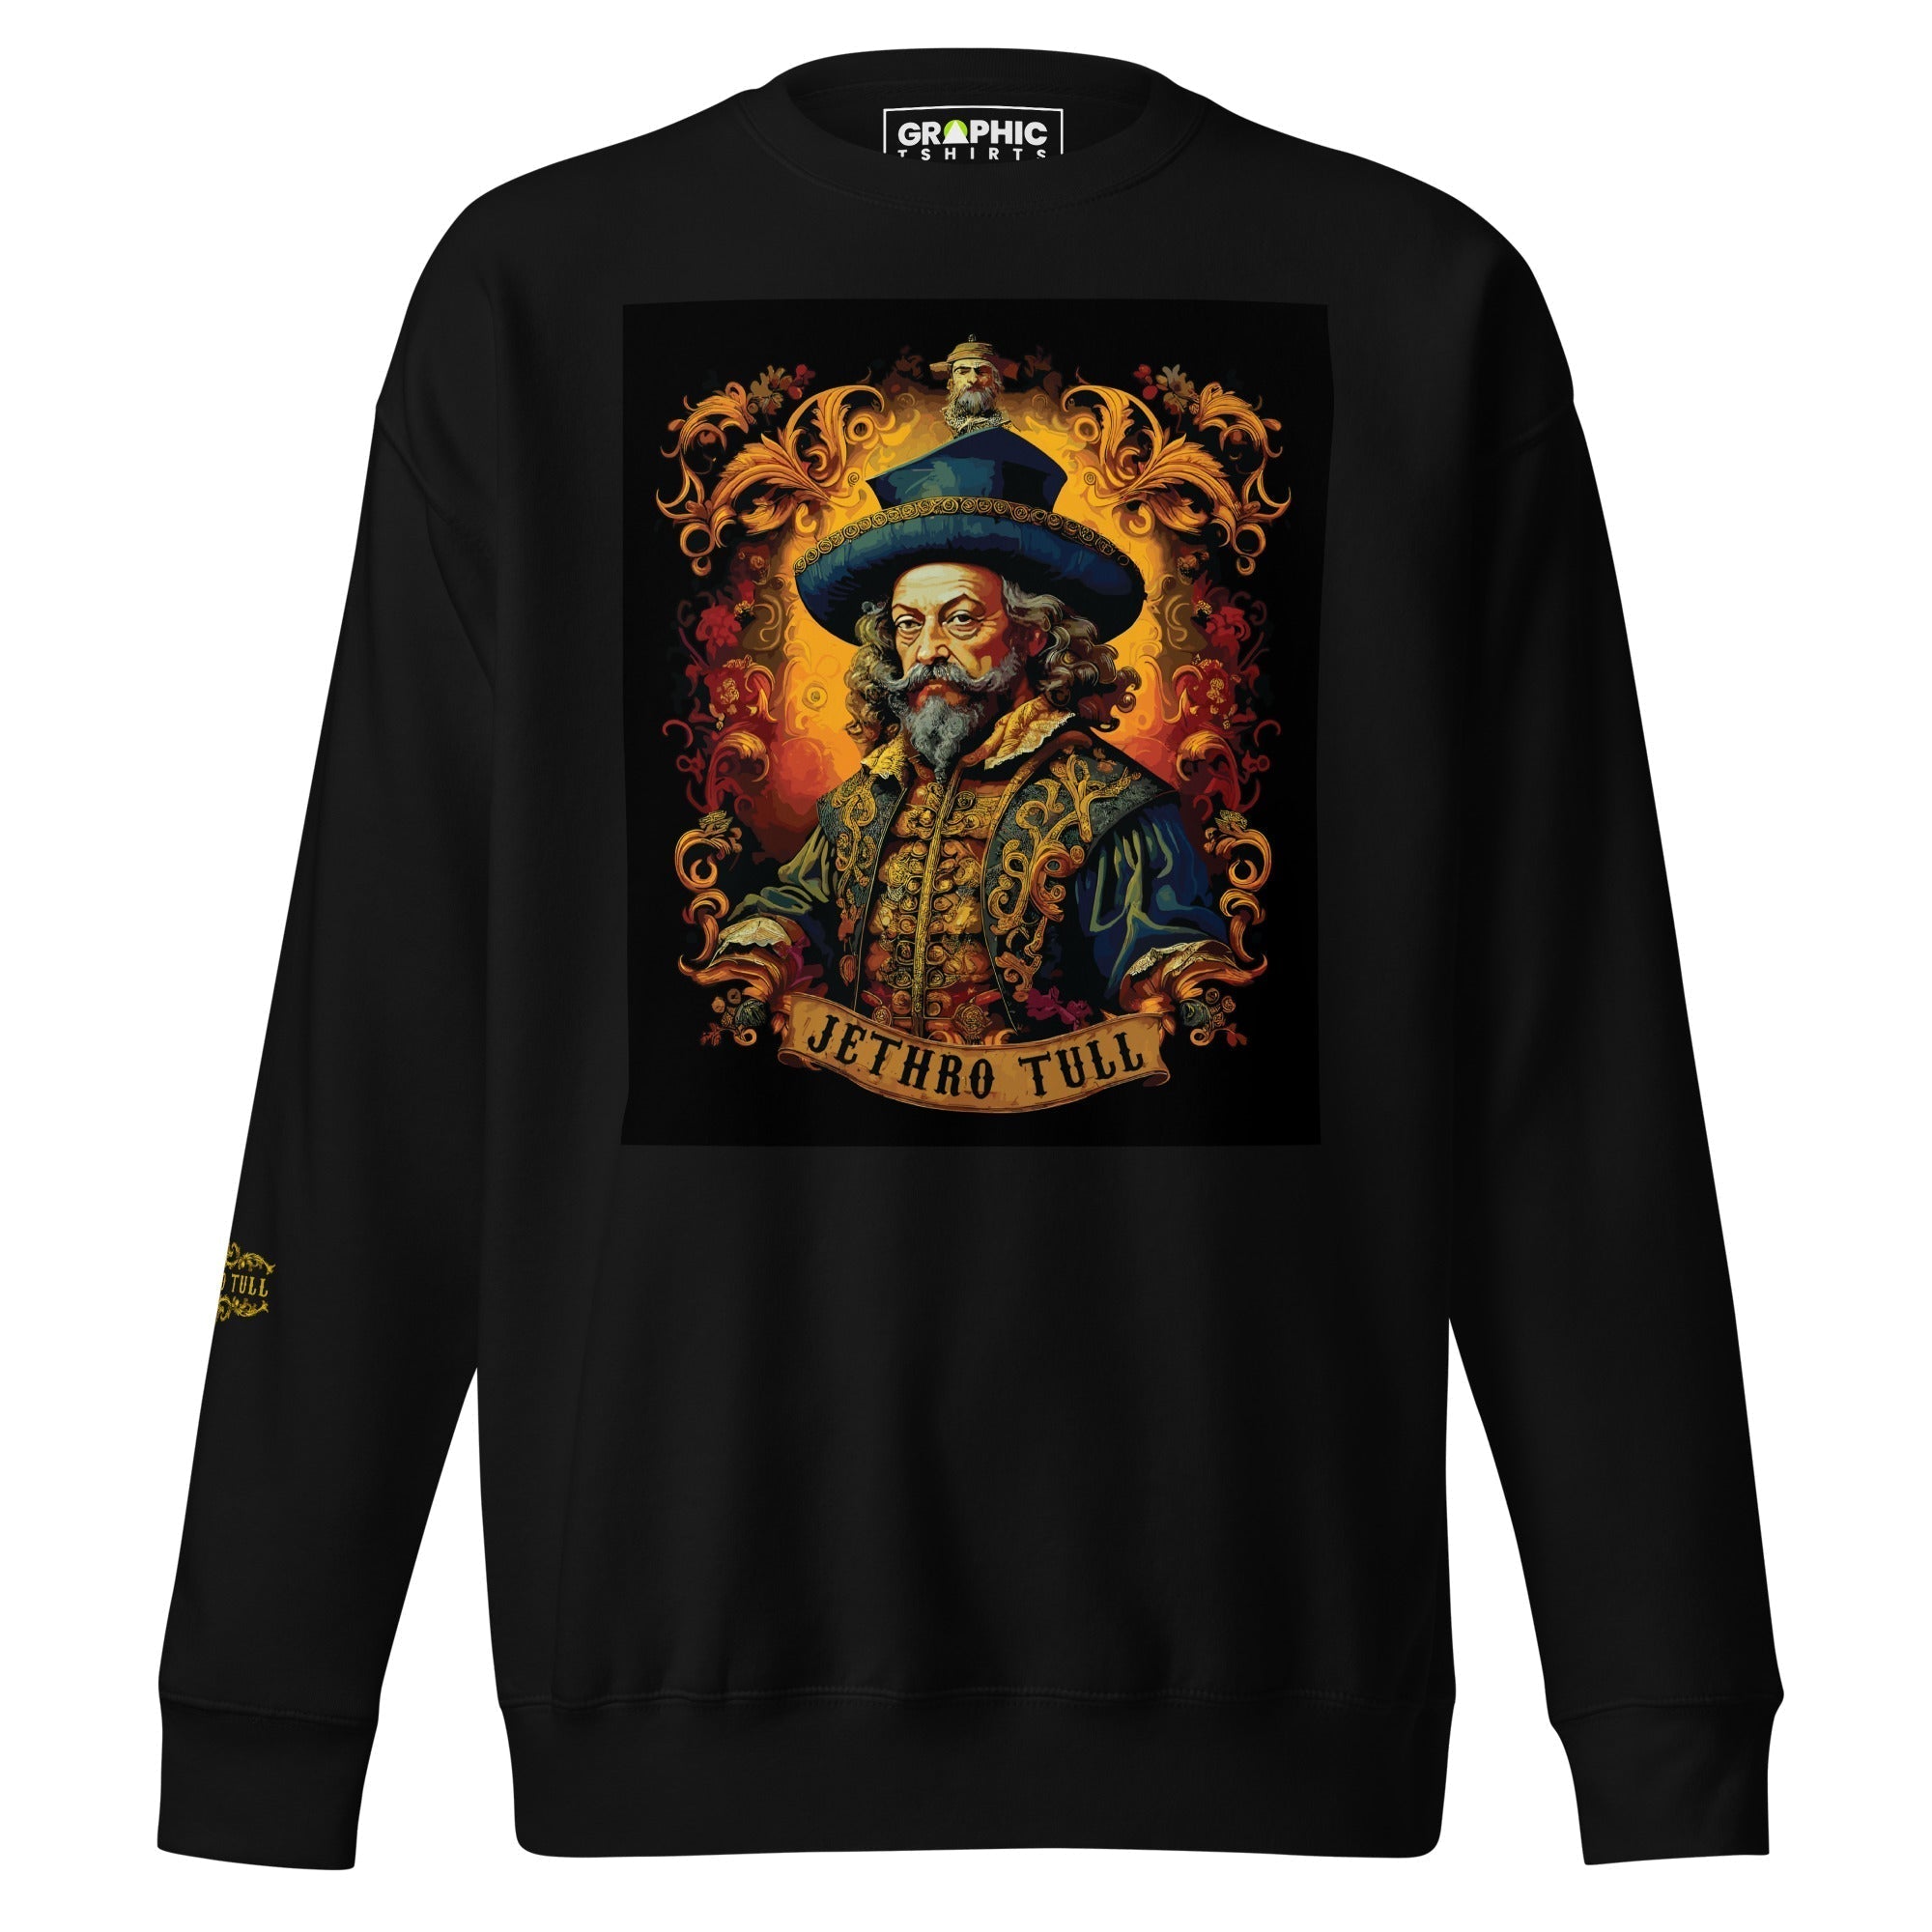 Unisex Premium Sweatshirt - Jethro Tull The Quintessential Artist Series v.6 - GRAPHIC T-SHIRTS